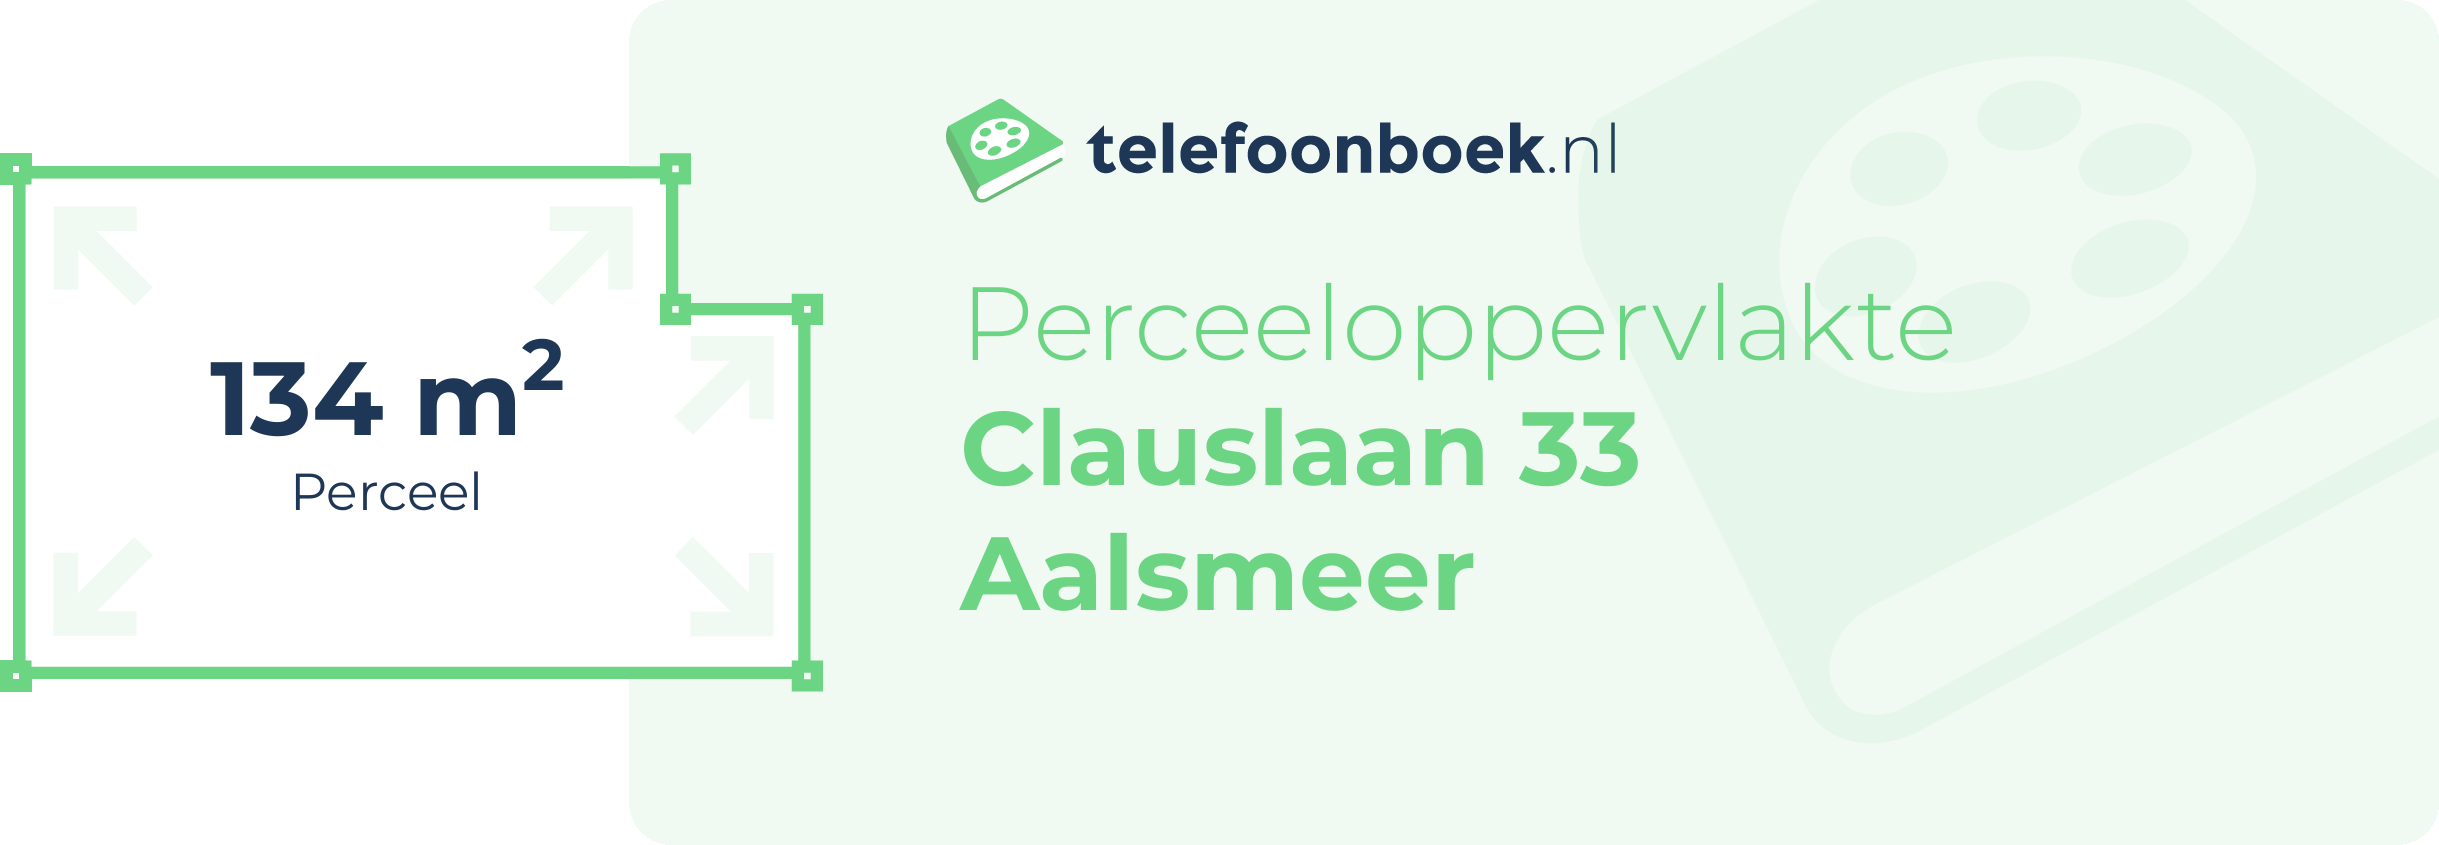 Perceeloppervlakte Clauslaan 33 Aalsmeer